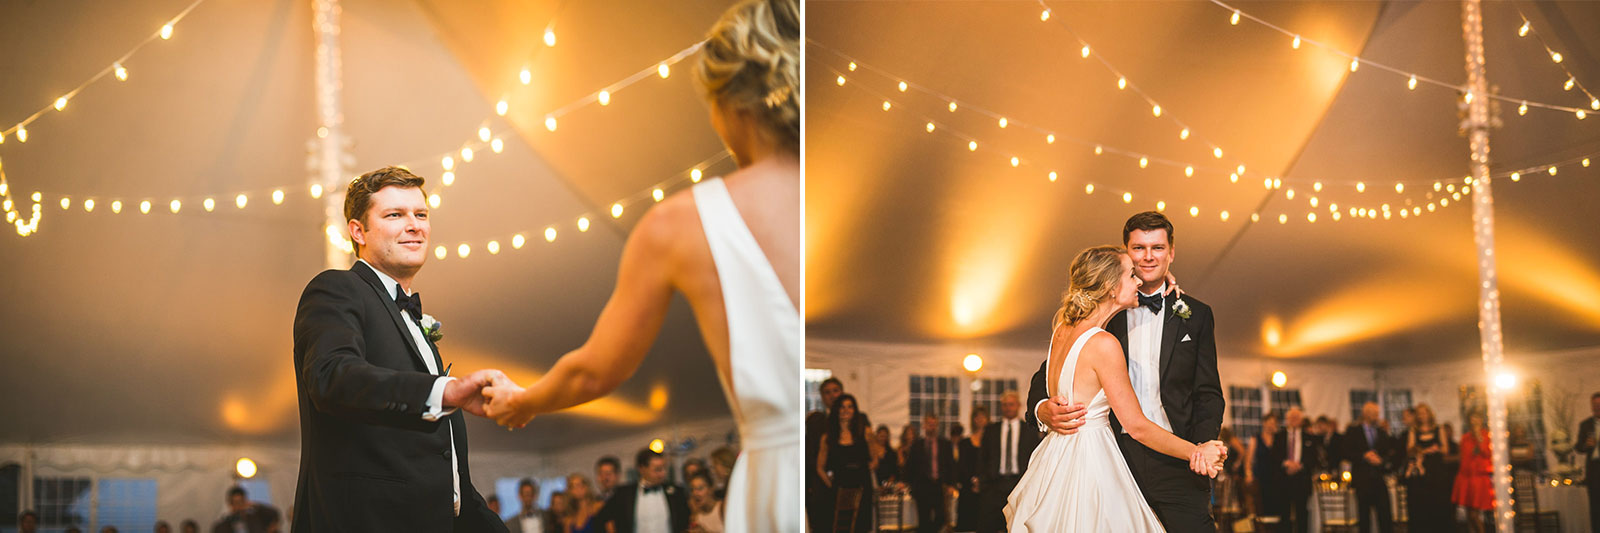 67 conway farms first dance wedding - Stephanie + Zack // Conway Farms Chicago Wedding Photographers